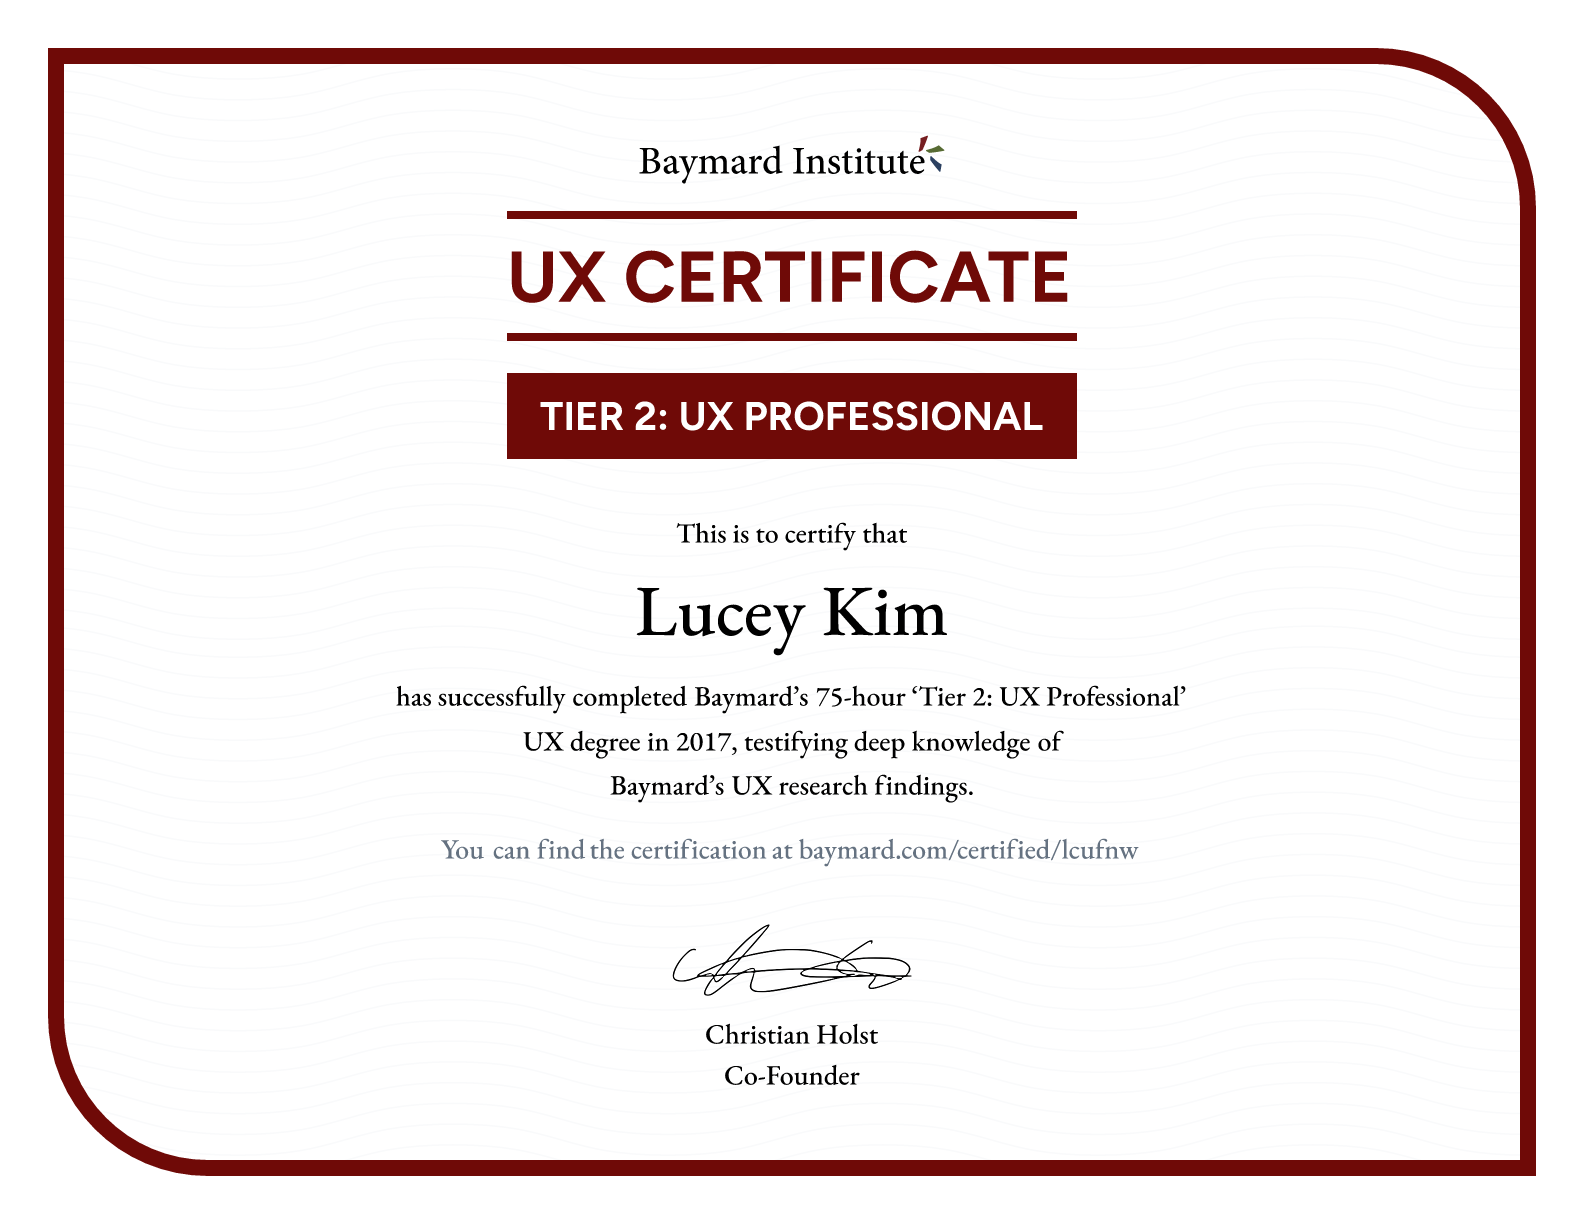 Lucey Kim’s certificate